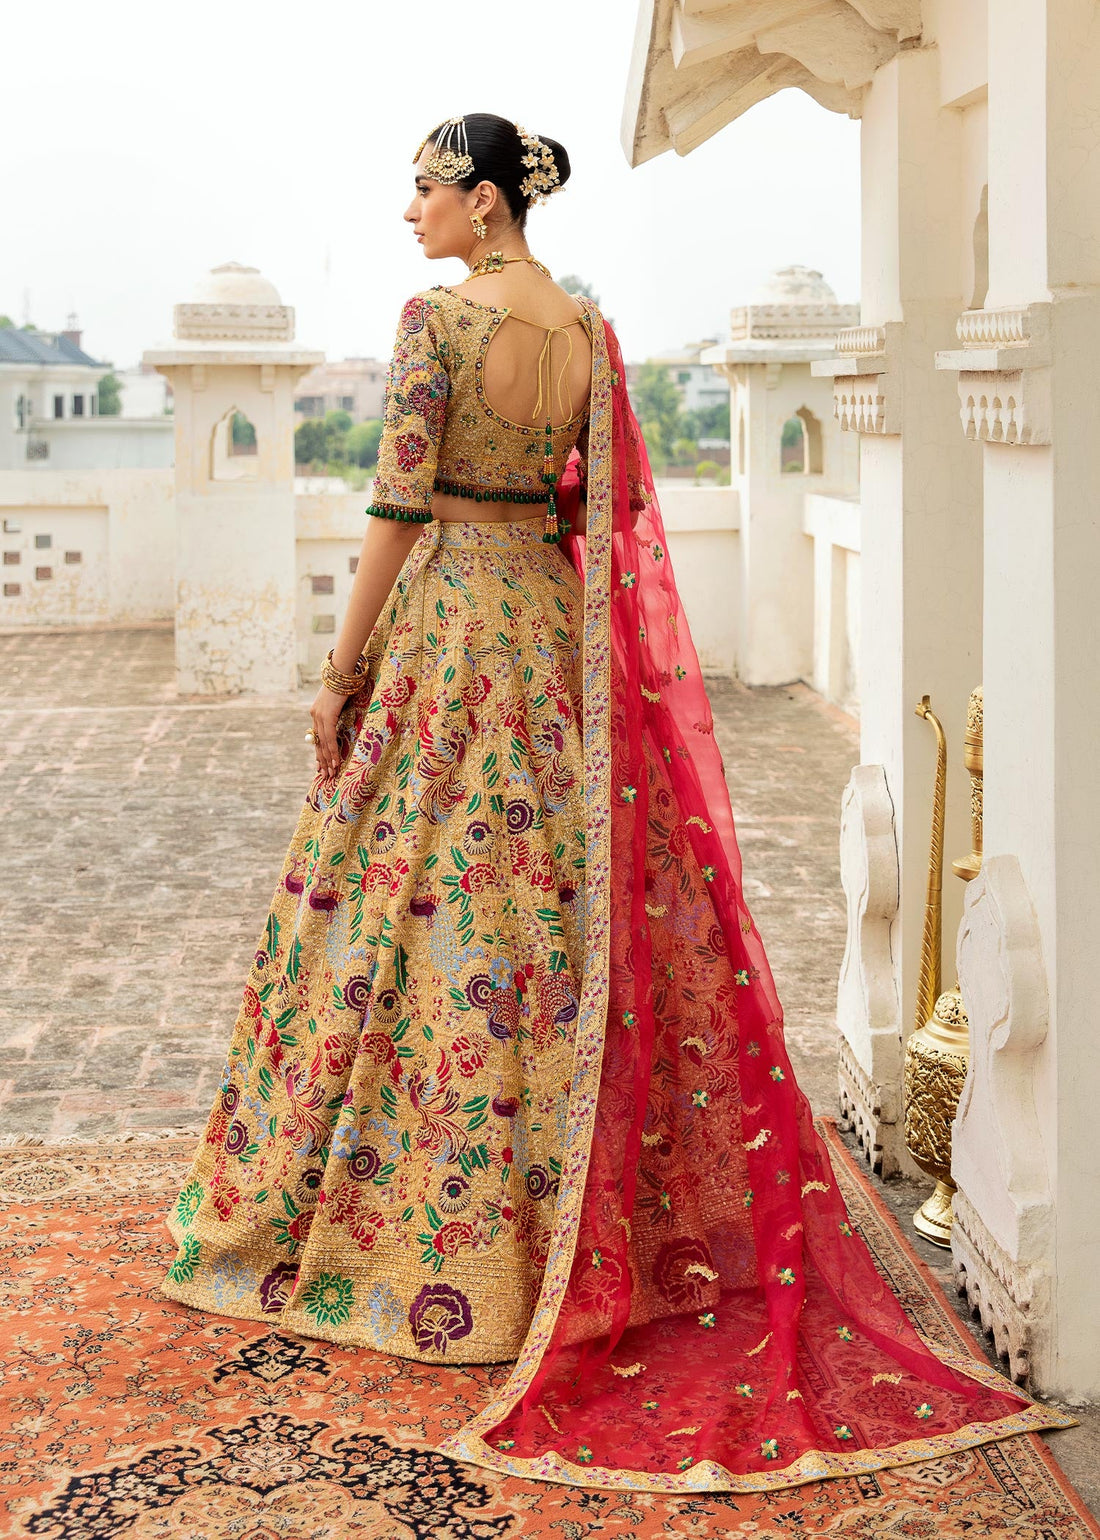 Waqas Shah | Taj Mahal | HUSNA BANO - Khanumjan  Pakistani Clothes and Designer Dresses in UK, USA 